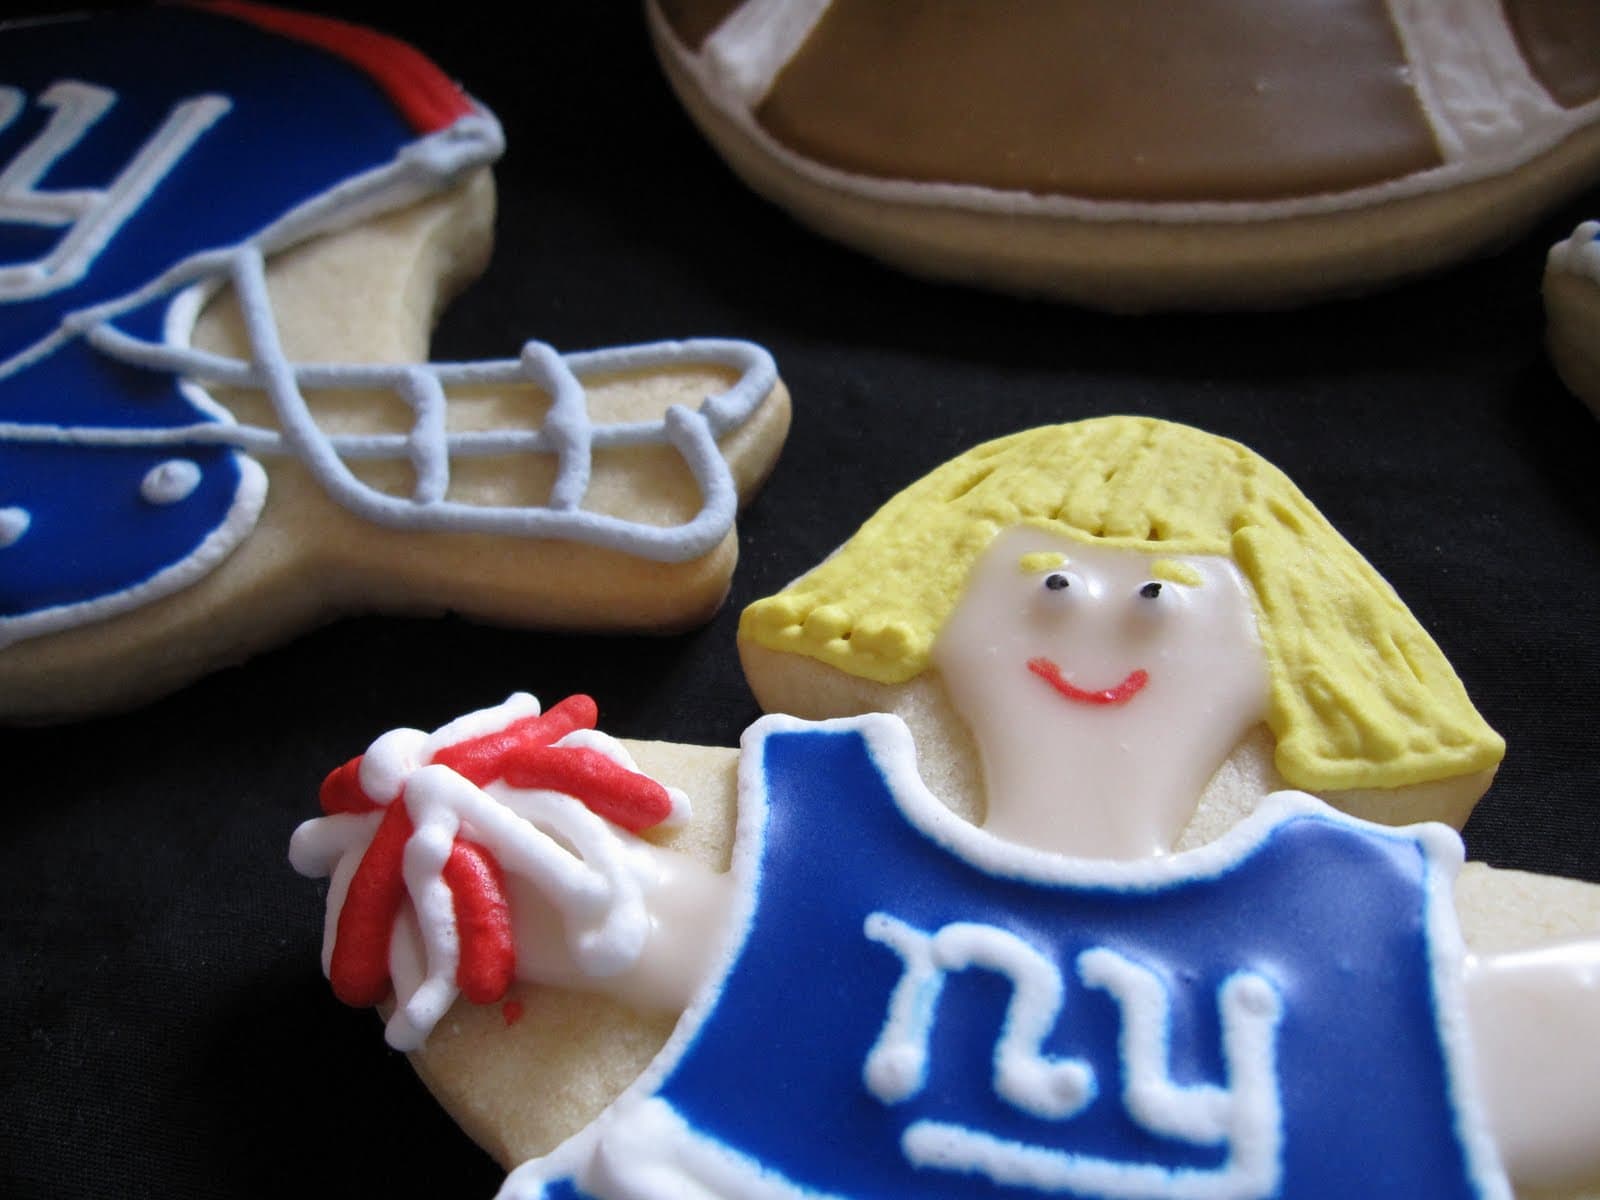 NY Giants Cheerleader and helmet cookies